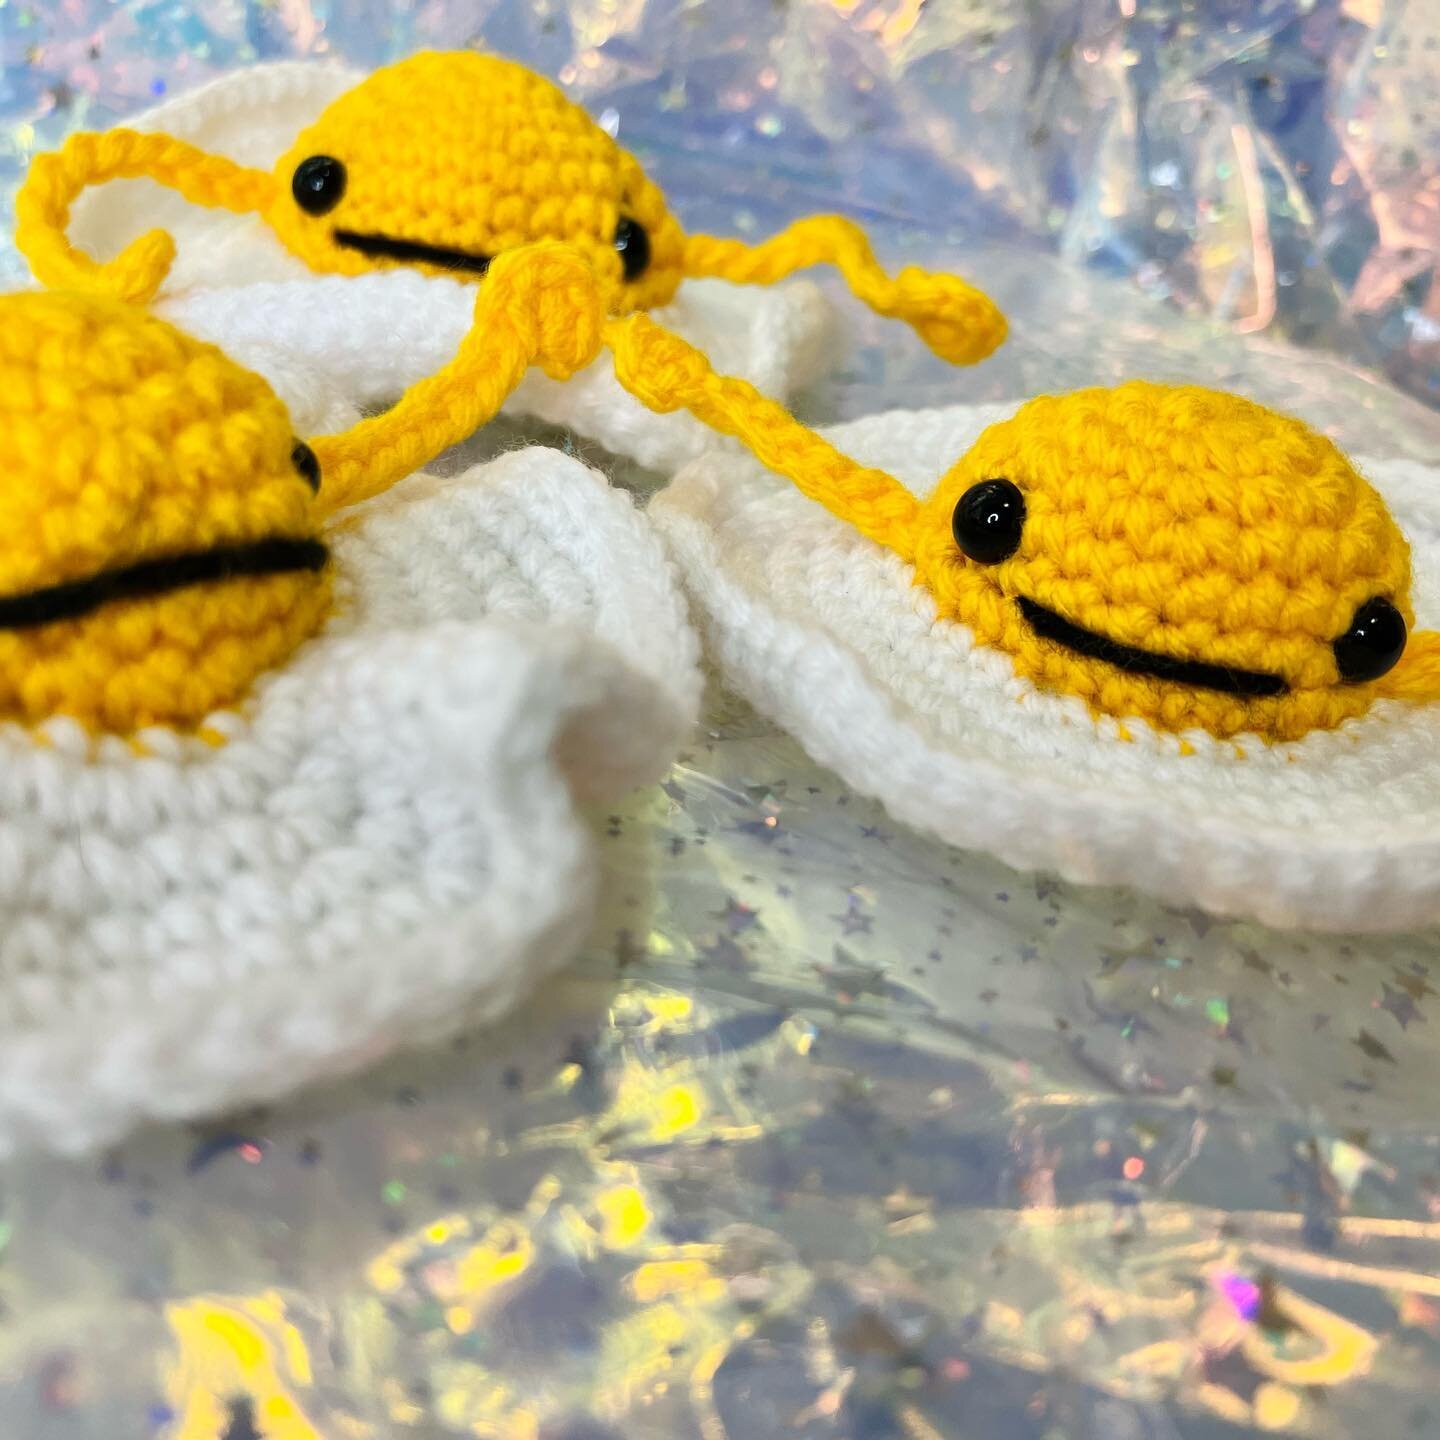 Egg friends!!! These lil eggies will never get stinky (unless you do something weird with them) 

&hellip;&hellip;&hellip;&hellip;&hellip;&hellip;&hellip;.

#edensprout #crochet #crochetersofinstagram #crochetart #handmade #yyjarts #crochetfriend